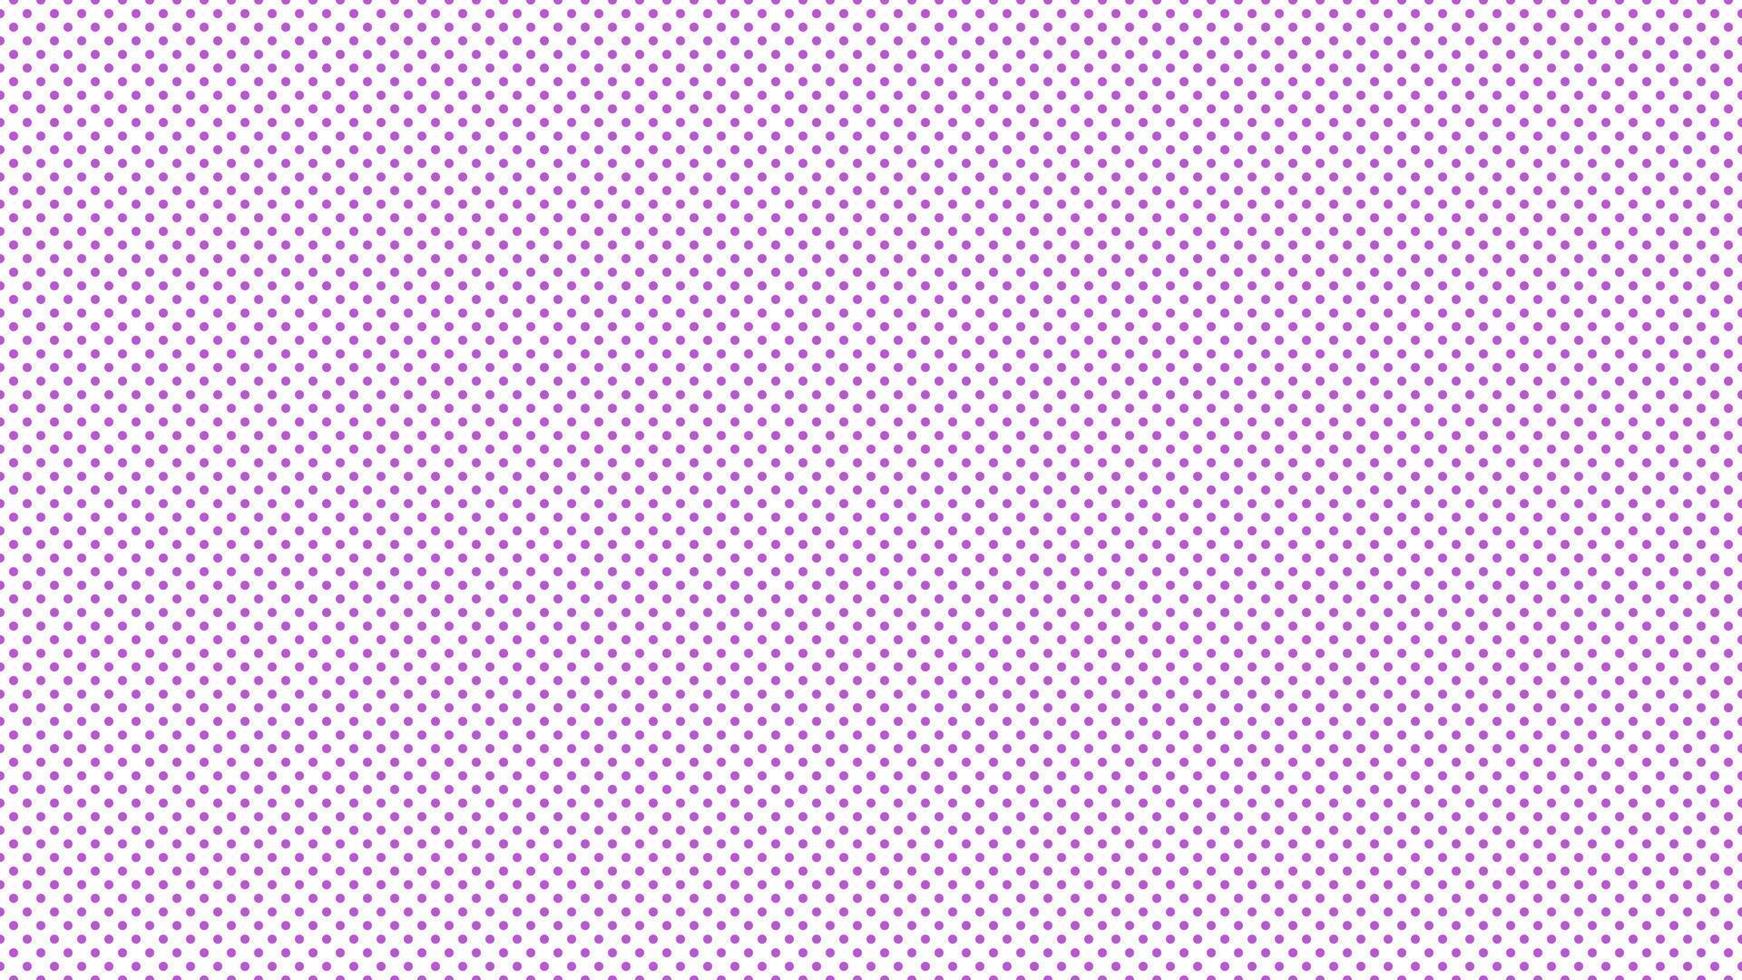 medium orchid purple color polka dots background vector